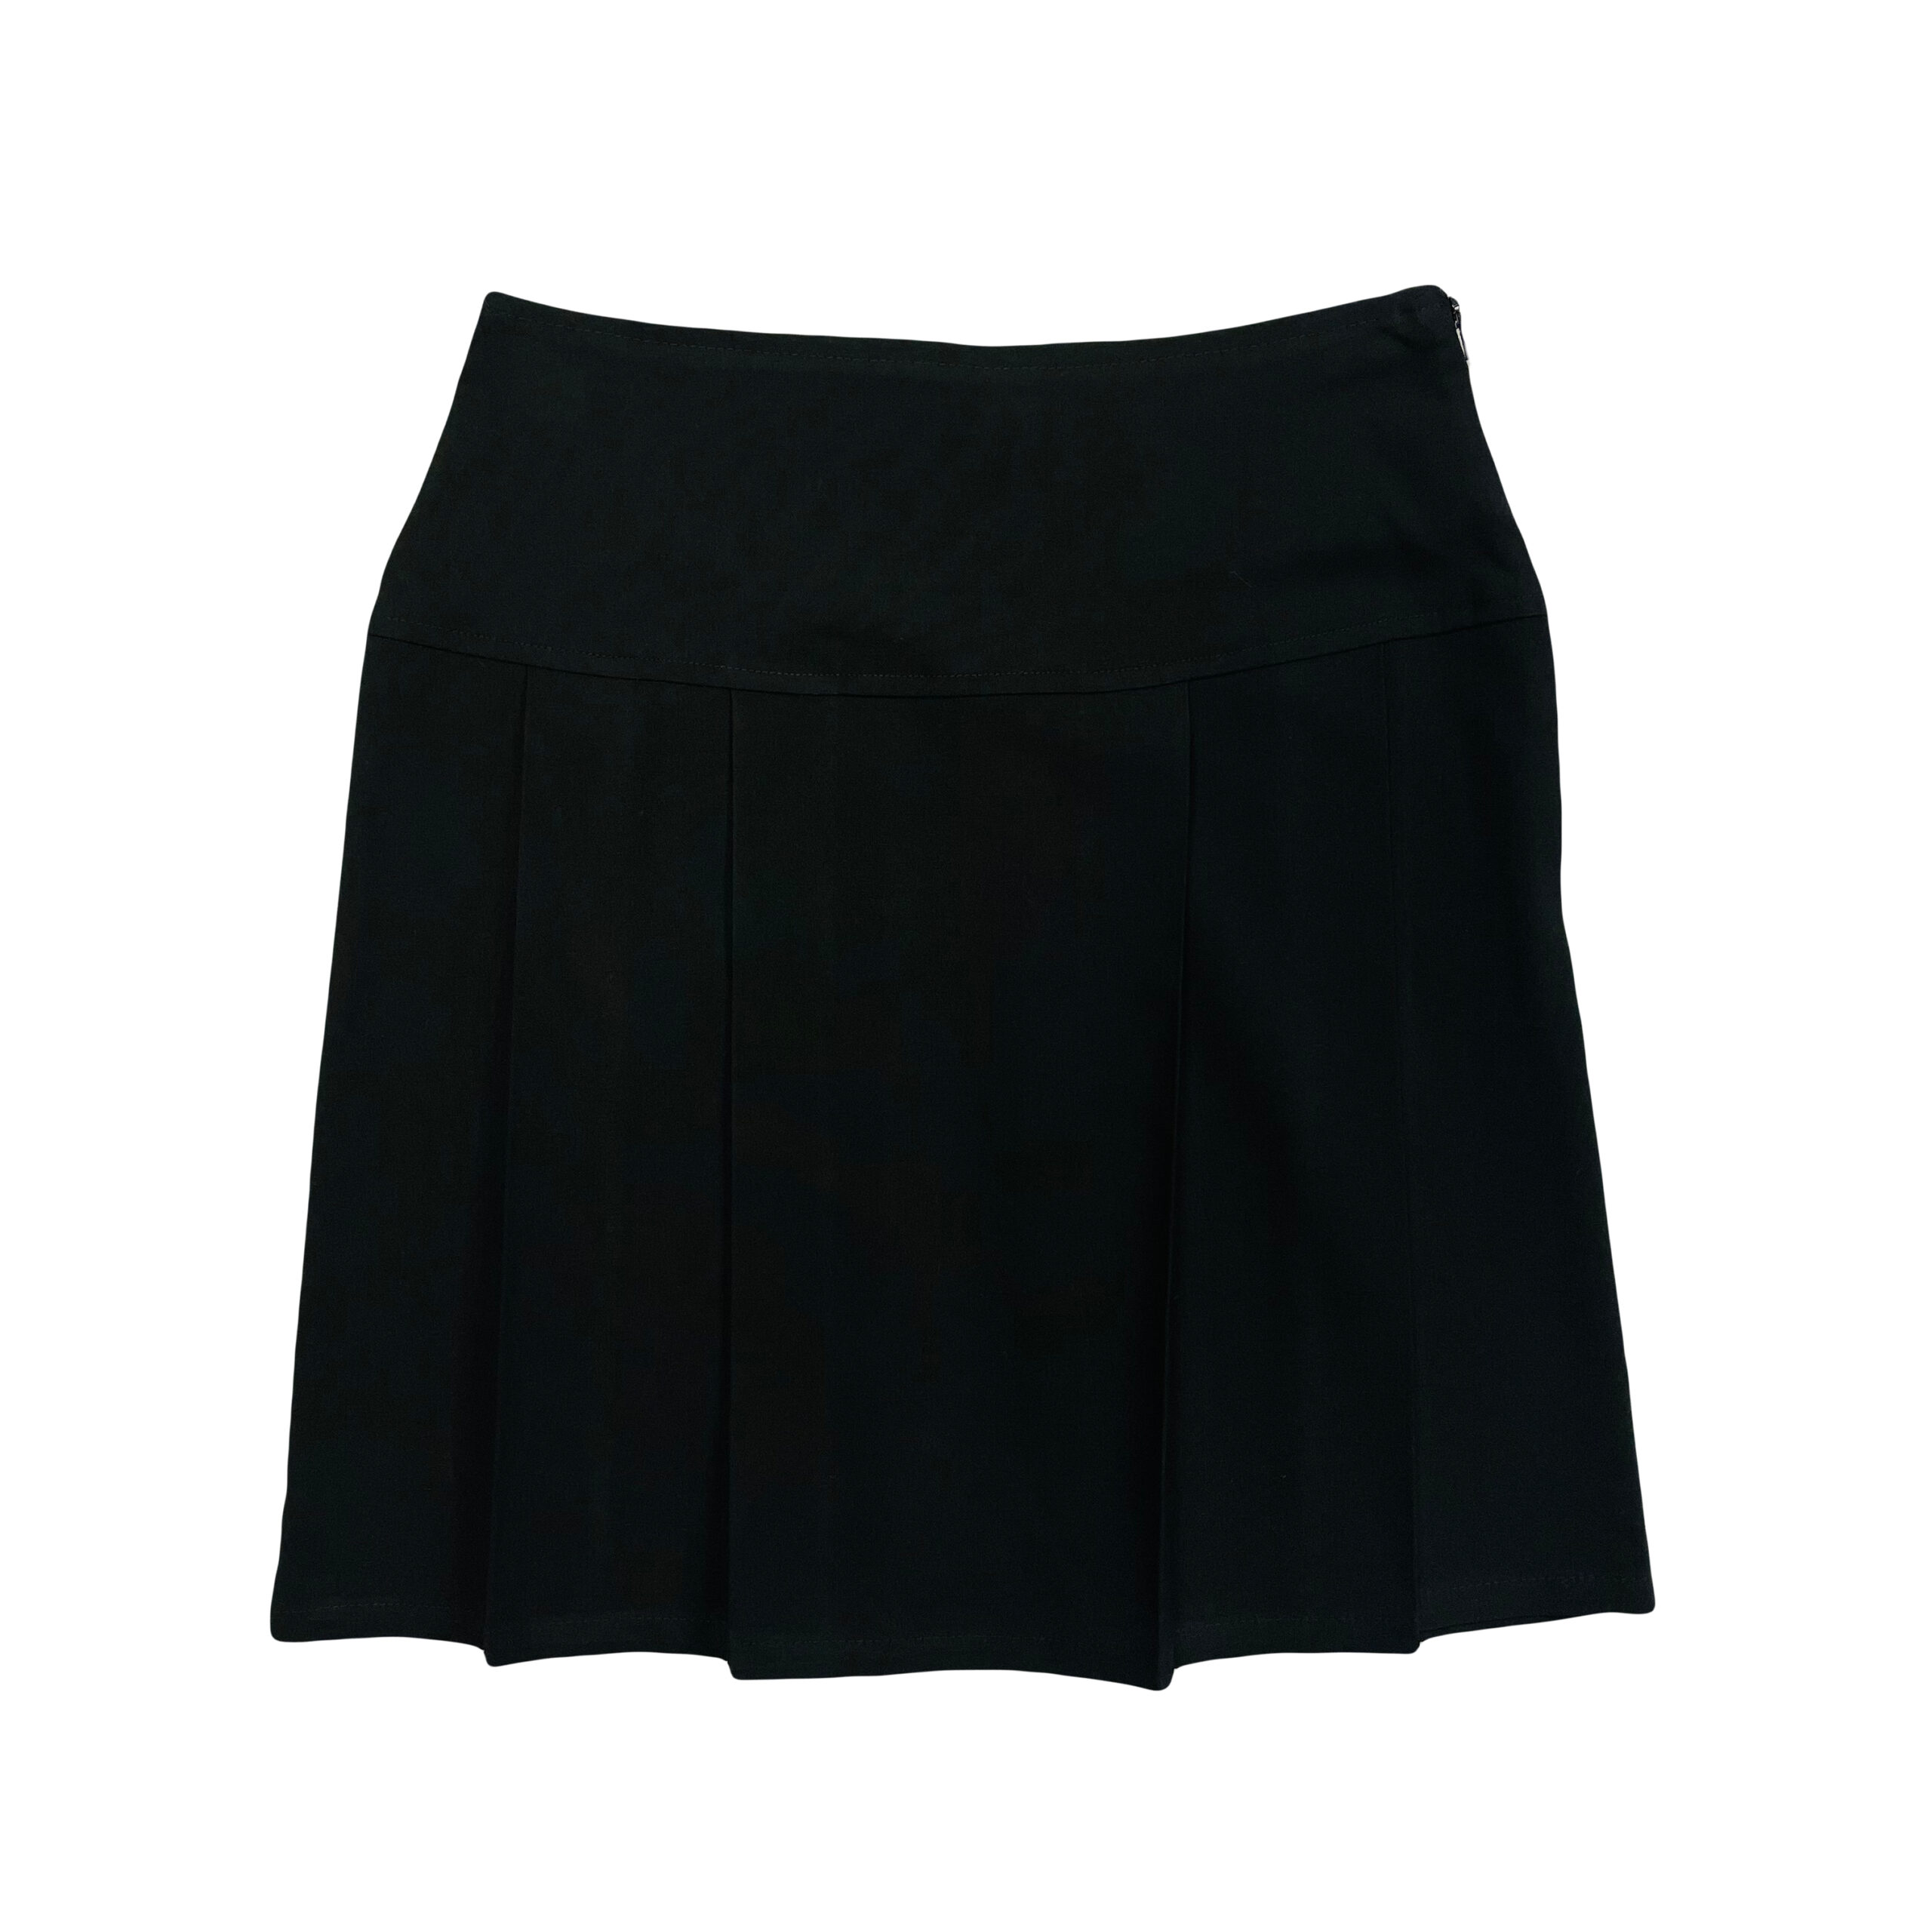 Herne Bay High School Skirt – With Elasticated Waist